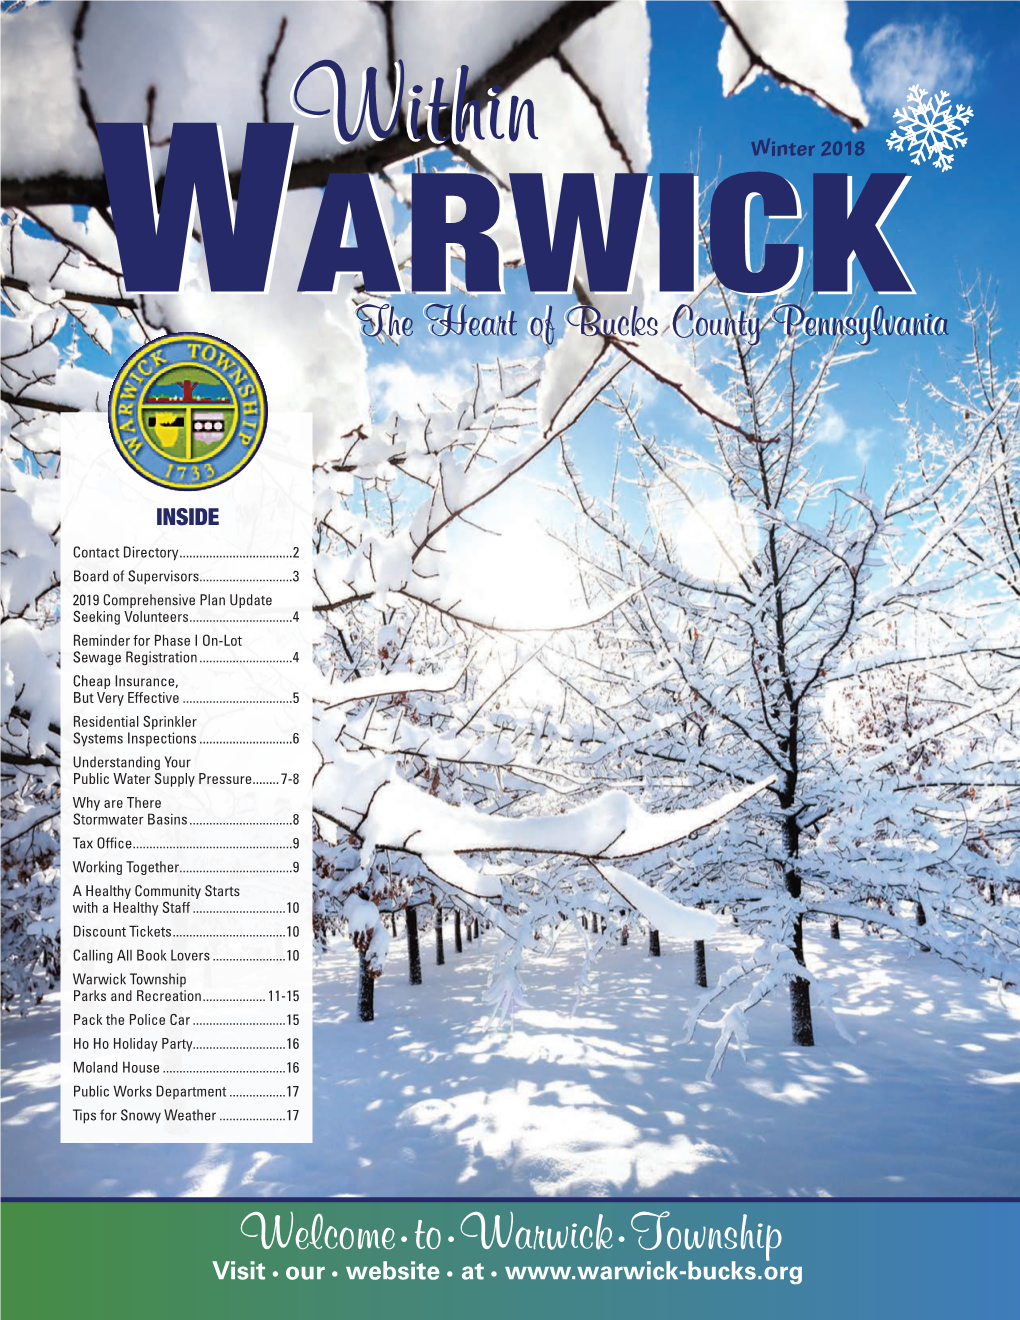 Winter 2018 Wwararwwickick Thethe Heartheart Ofof Bucksbucks Countycounty Pennsylvaniapennsylvania